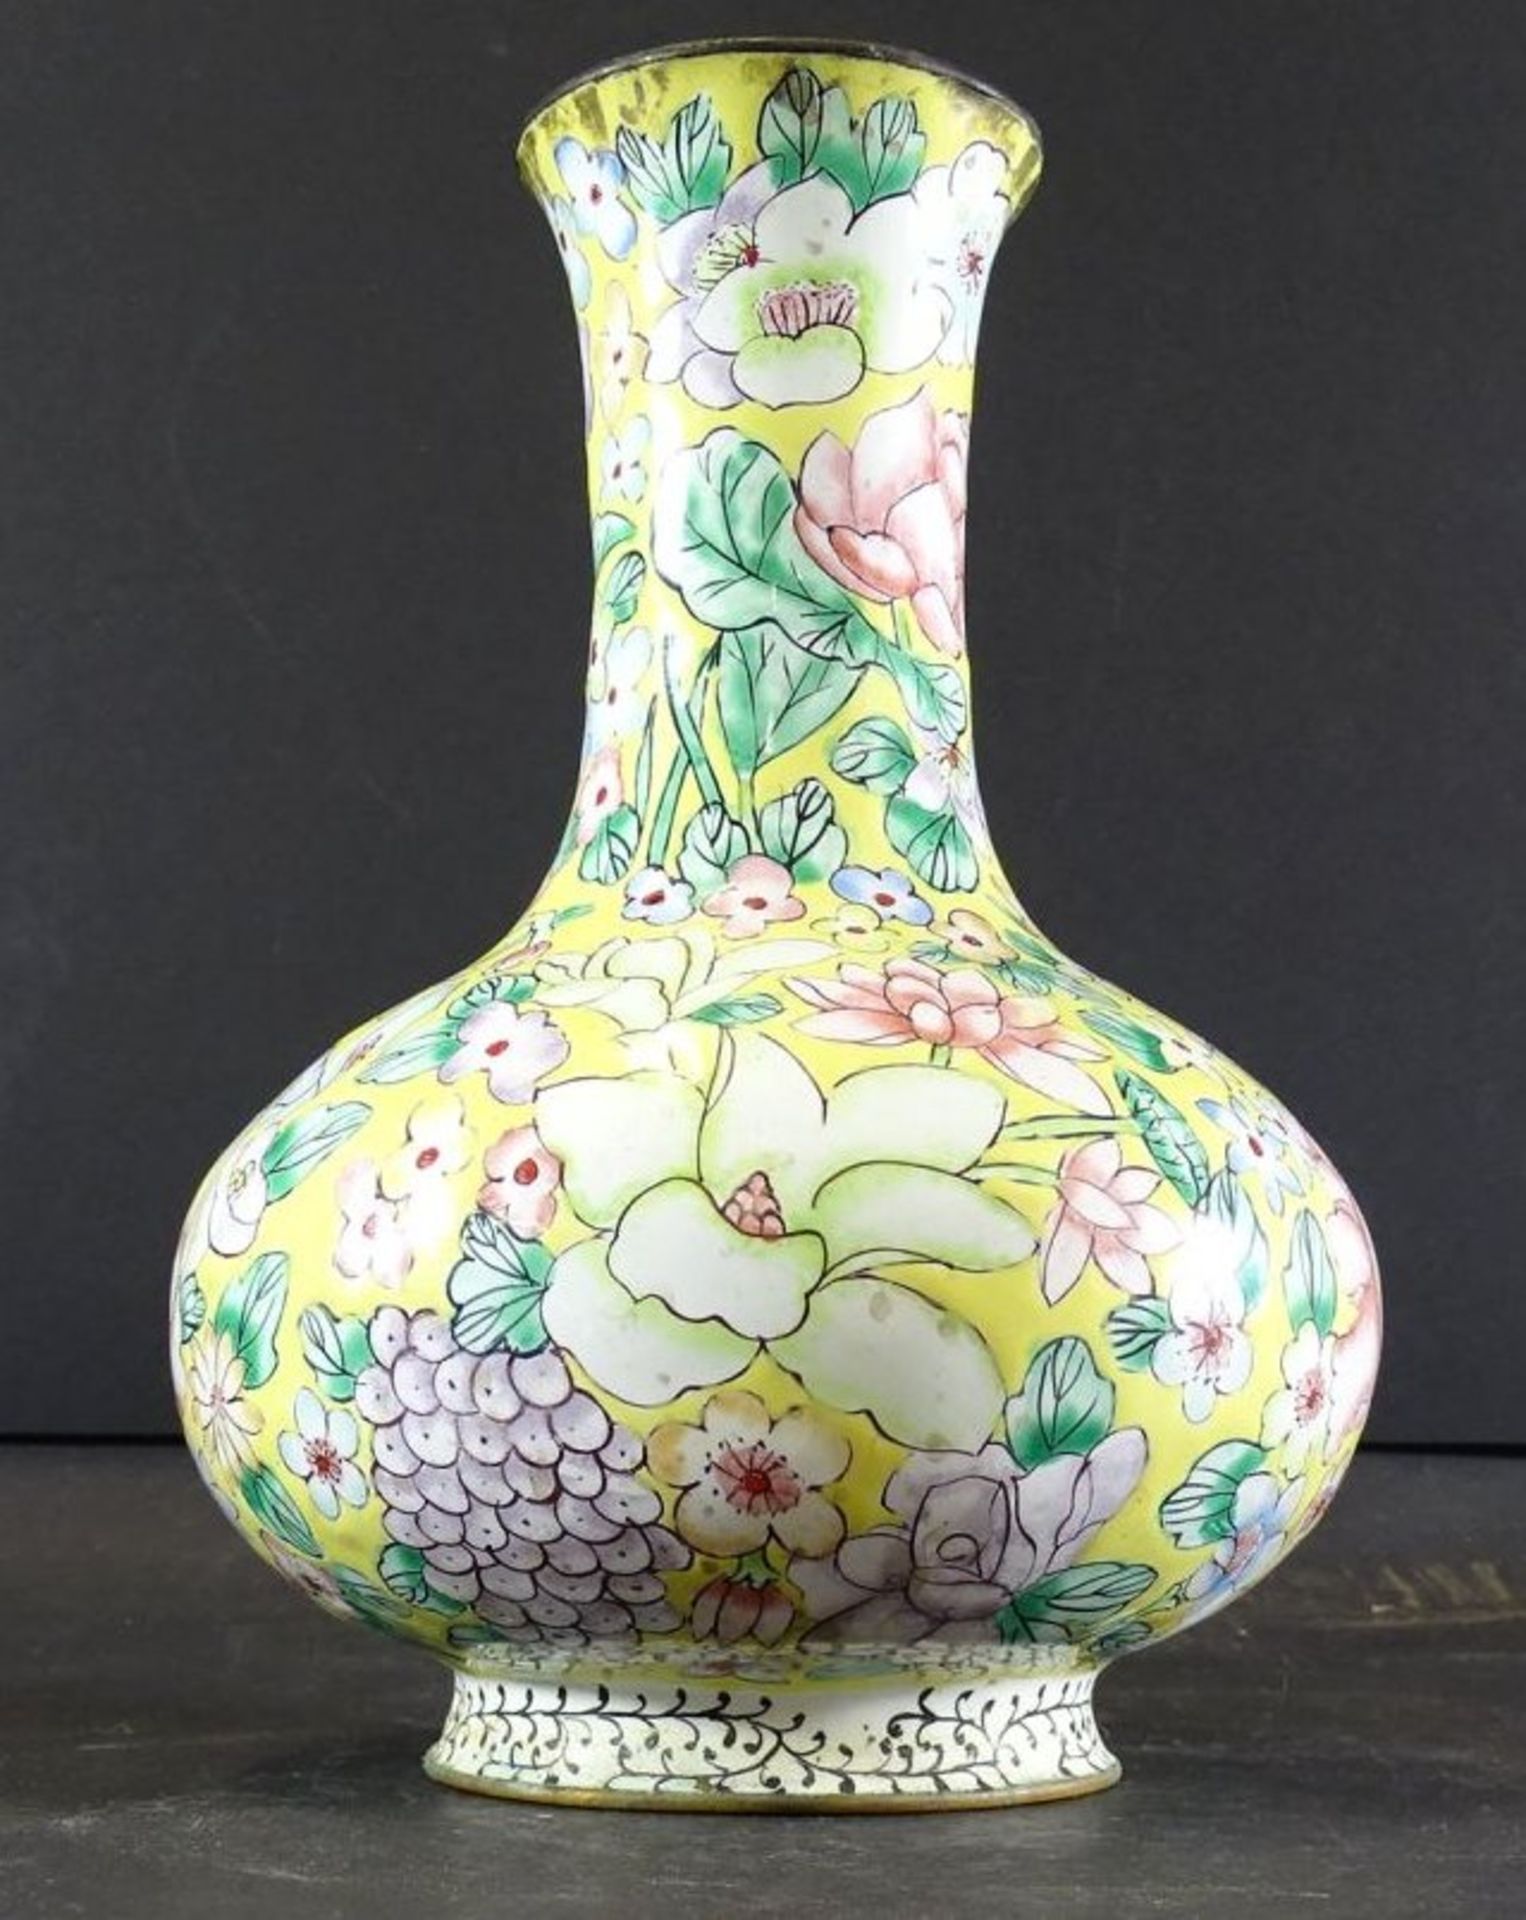 Cloisonne-Vase mit floralen Dekor, China, H-19 cm, - Image 2 of 6